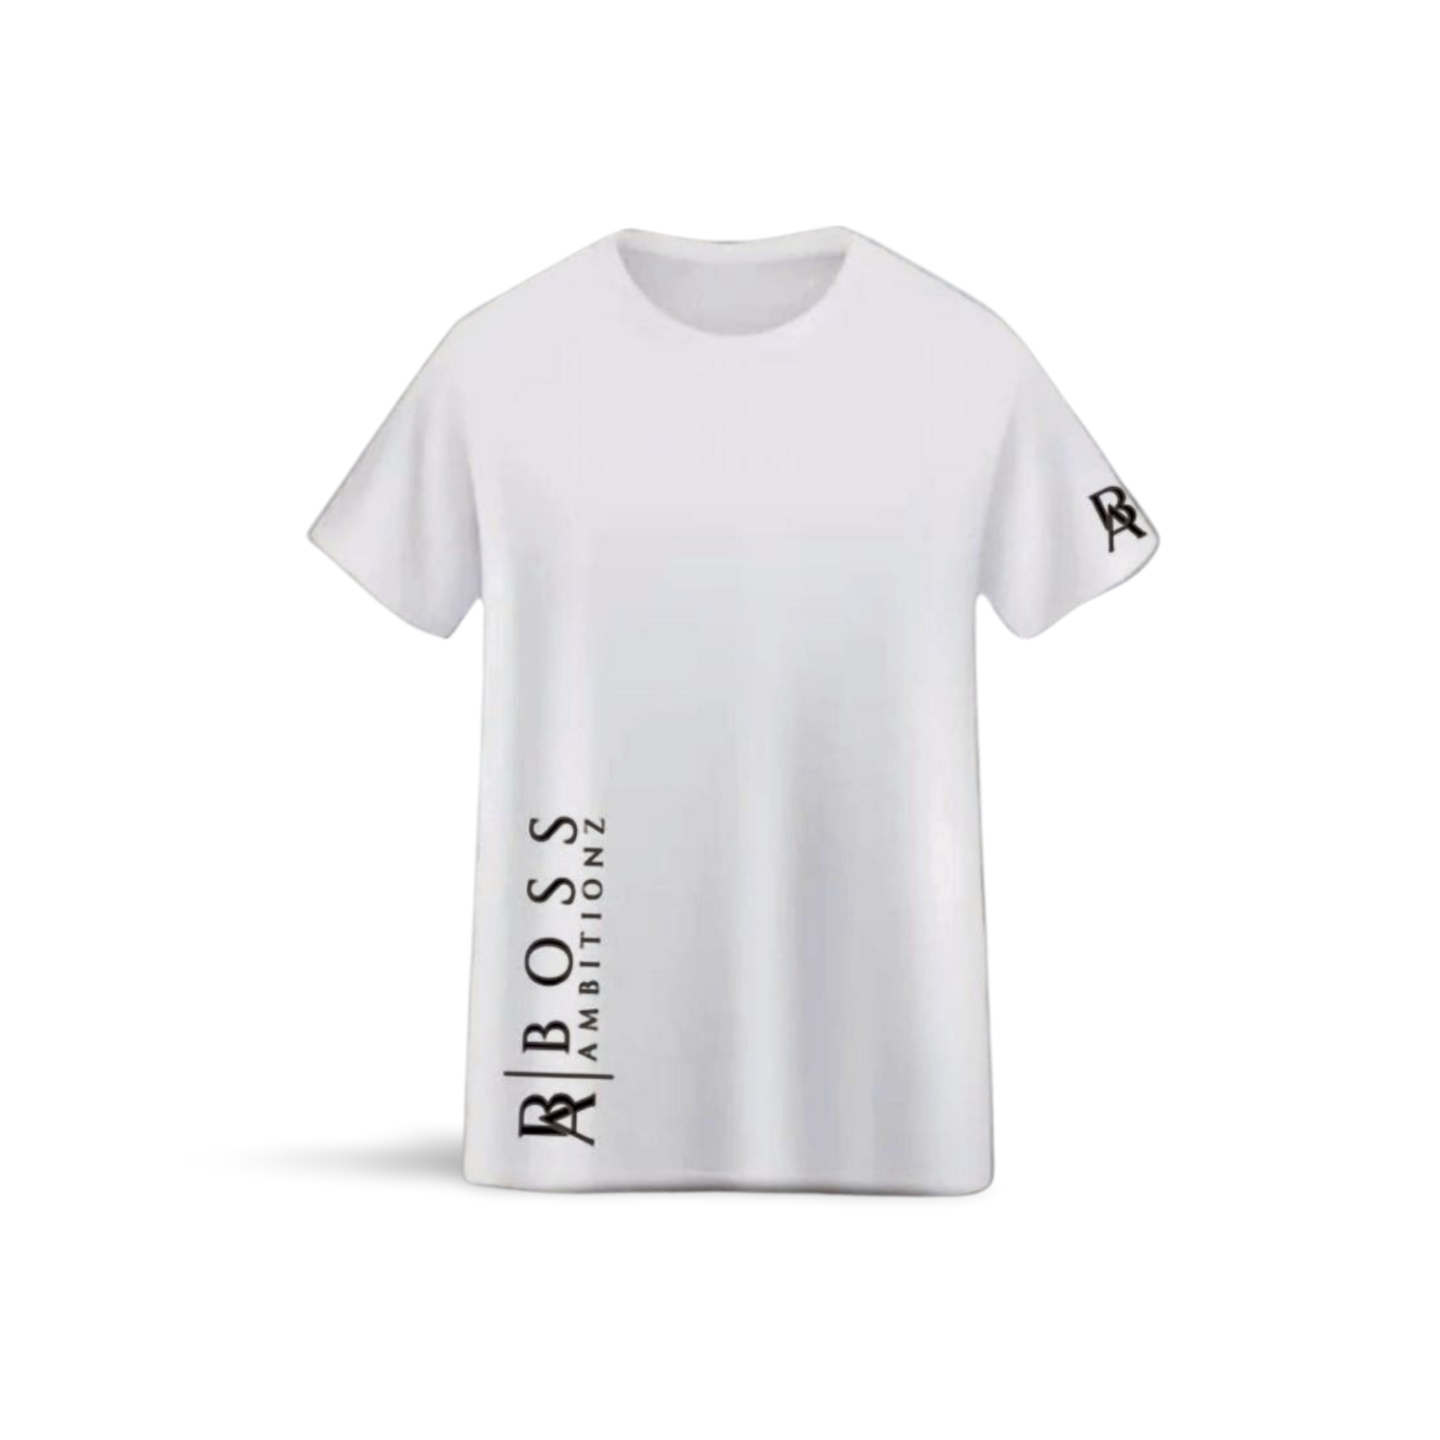 Boss Ambitionz New Modern Design White Logo T-Shirt for the Ultimate Streetwear Style - BossAmbitionz M / White